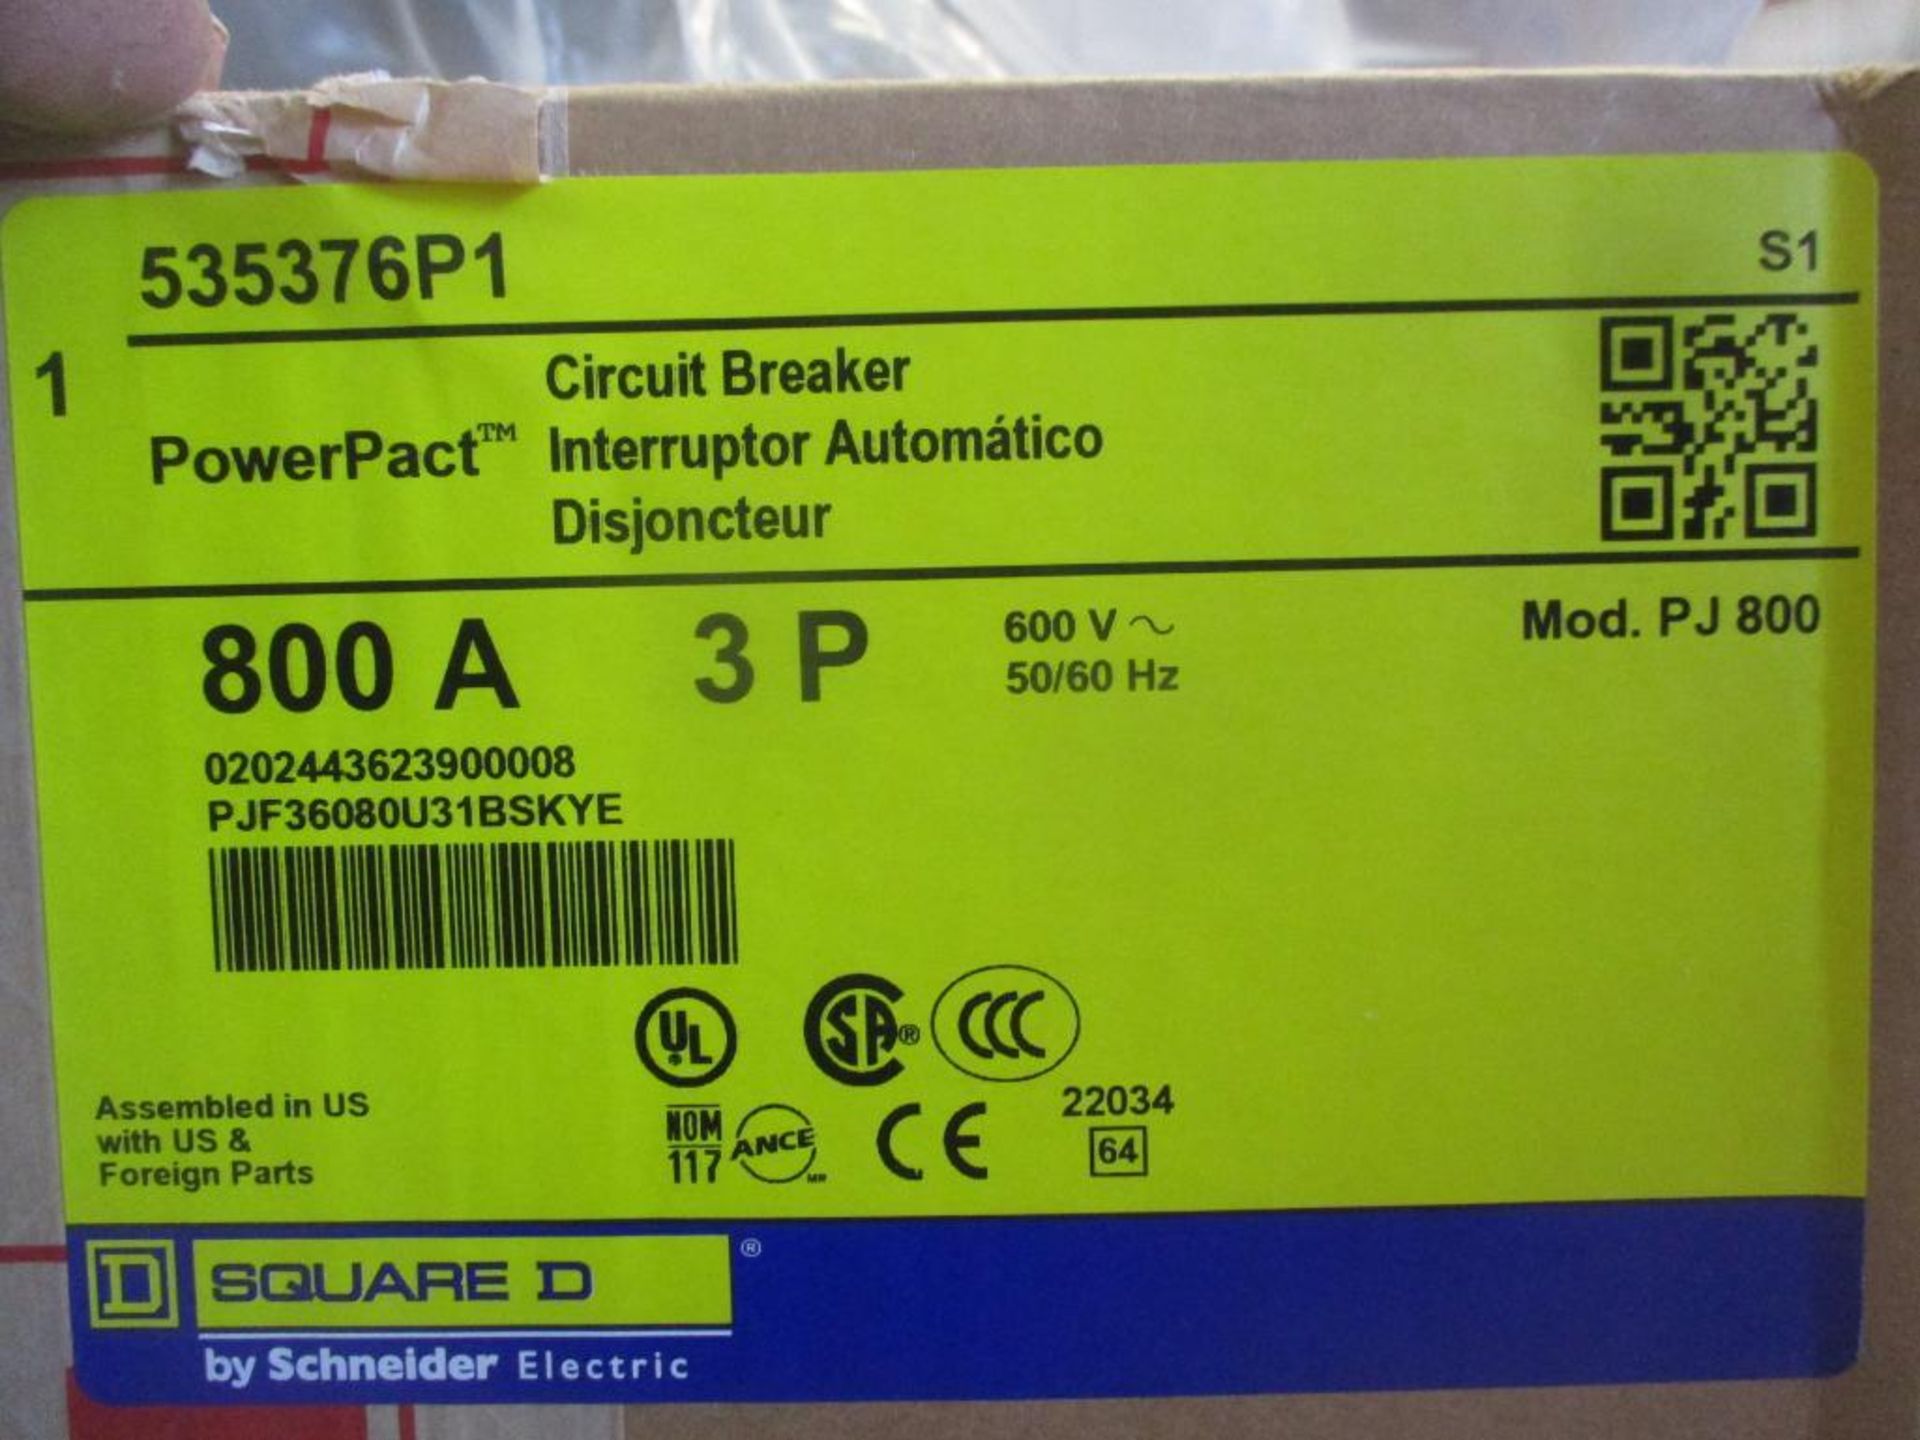 Square D 800 AMP Circuit Breaker, 53537681, 800A, 3P, 600 VAC, Mod. PJ 800 (New in Box) - Image 4 of 4